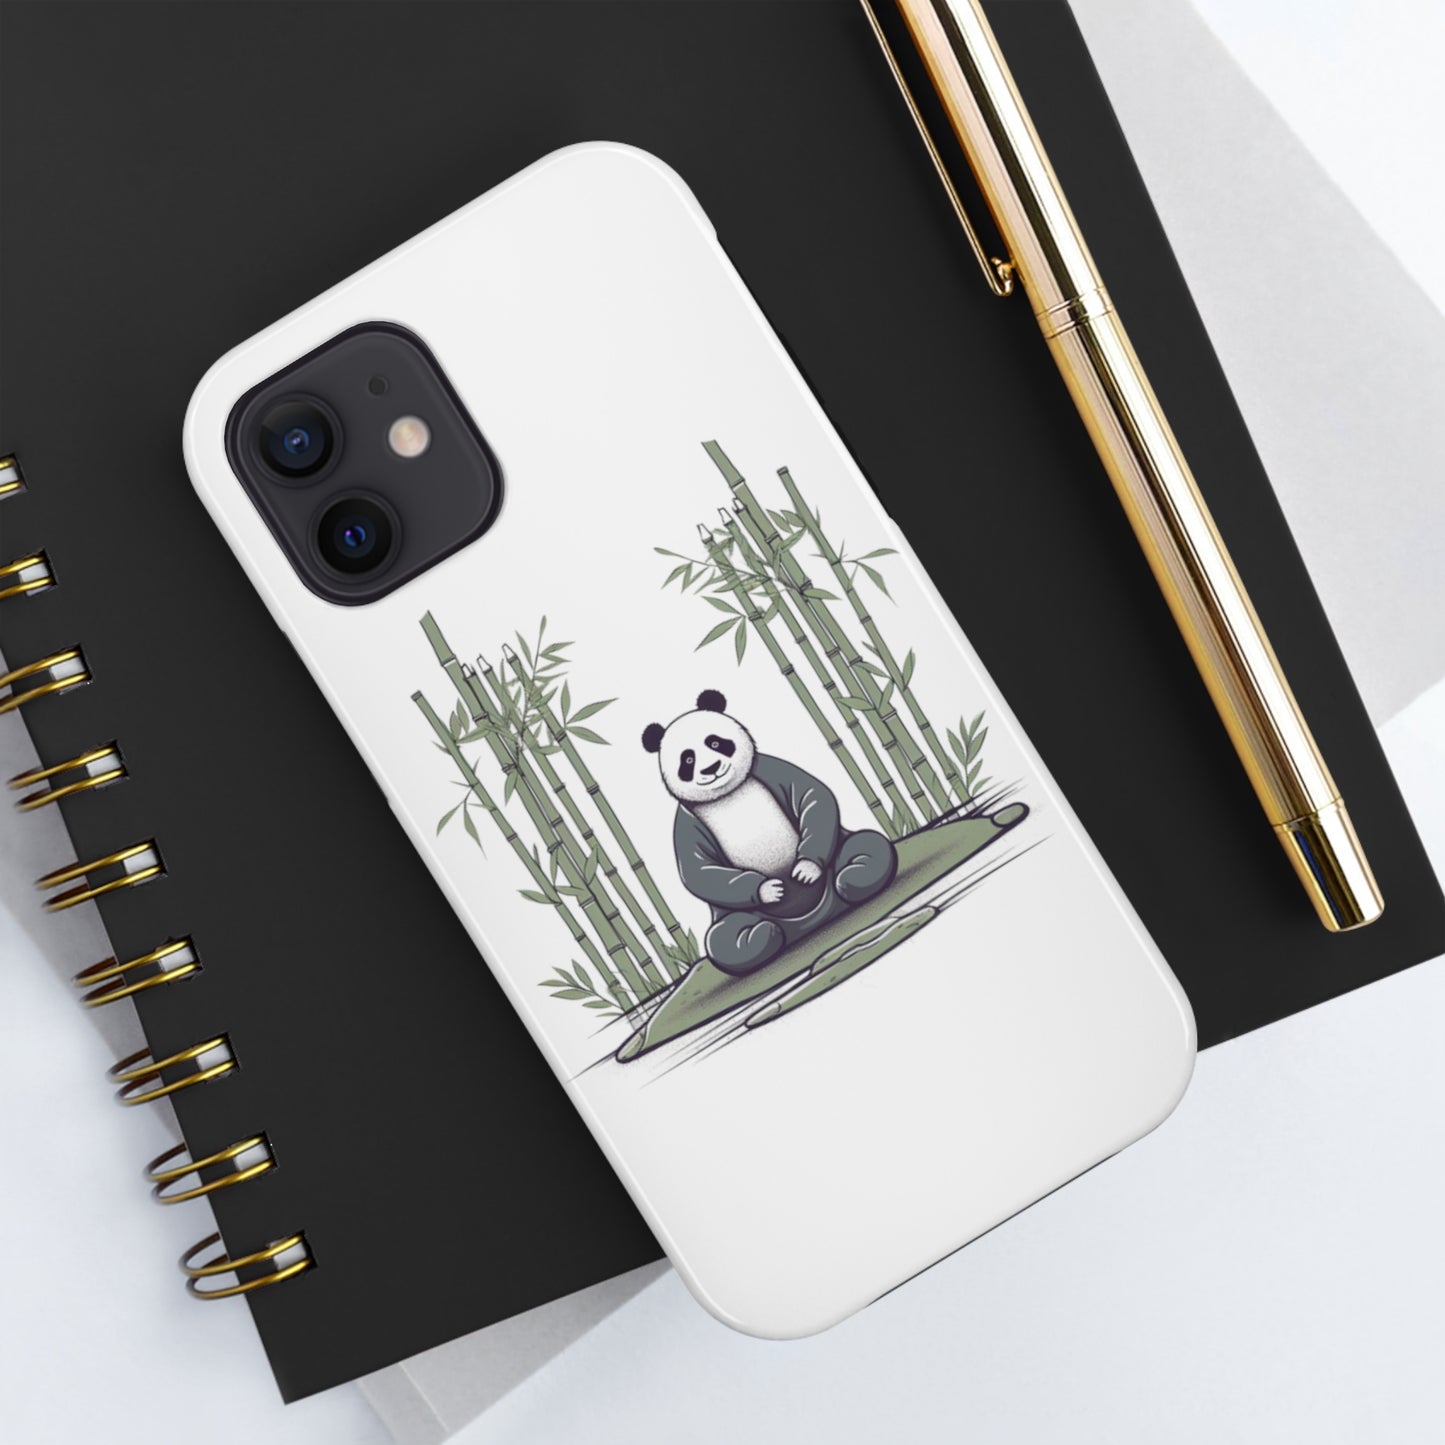 Tough Phone Cases: A Zen Panda Meditating Amidst Bamboo Shoots